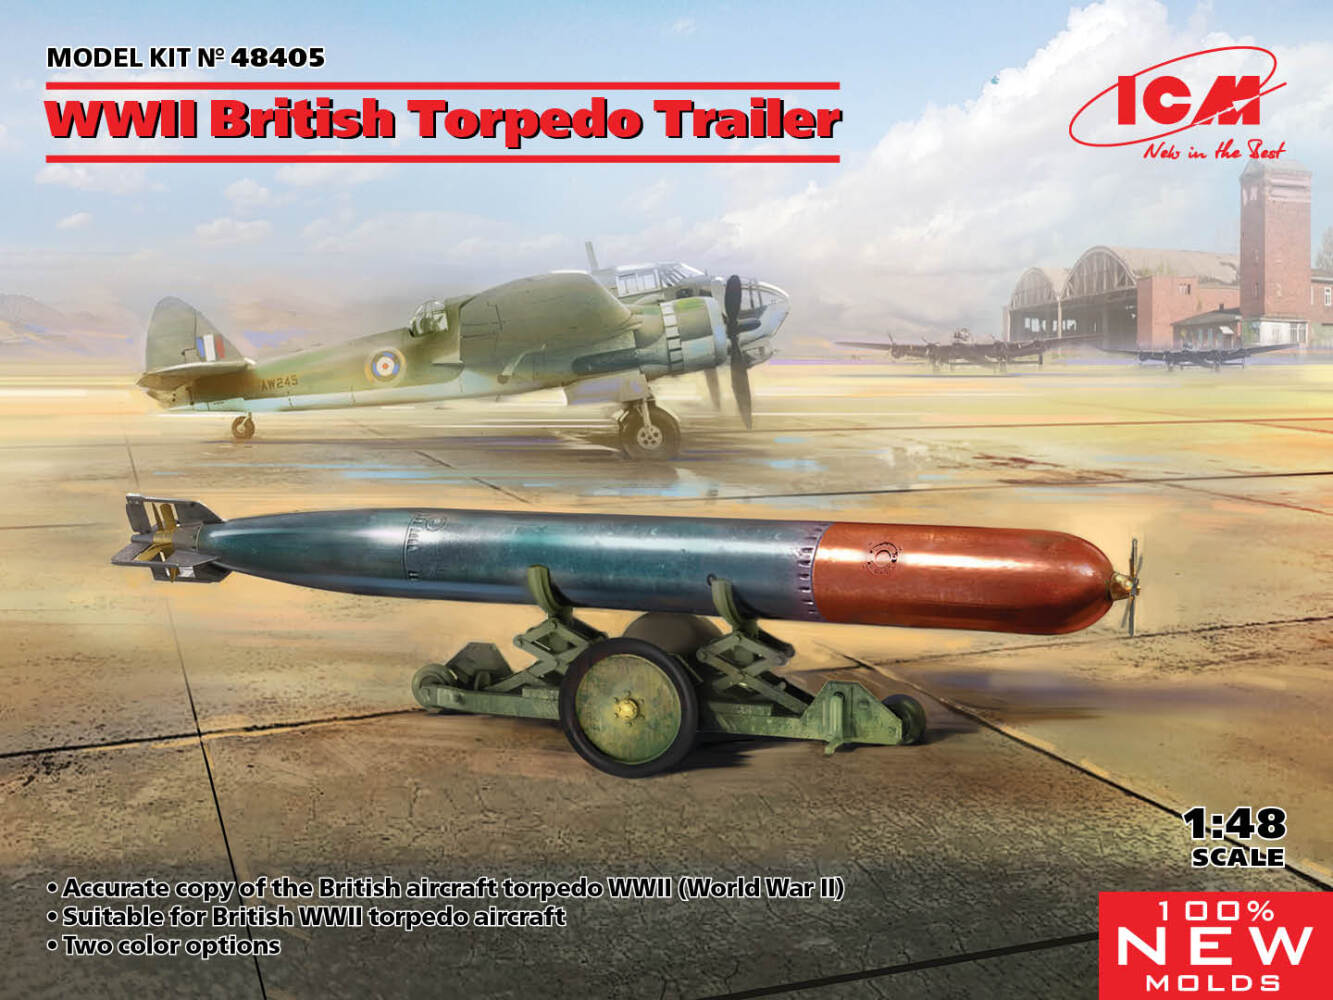 WWII British Torpedo & Trailer